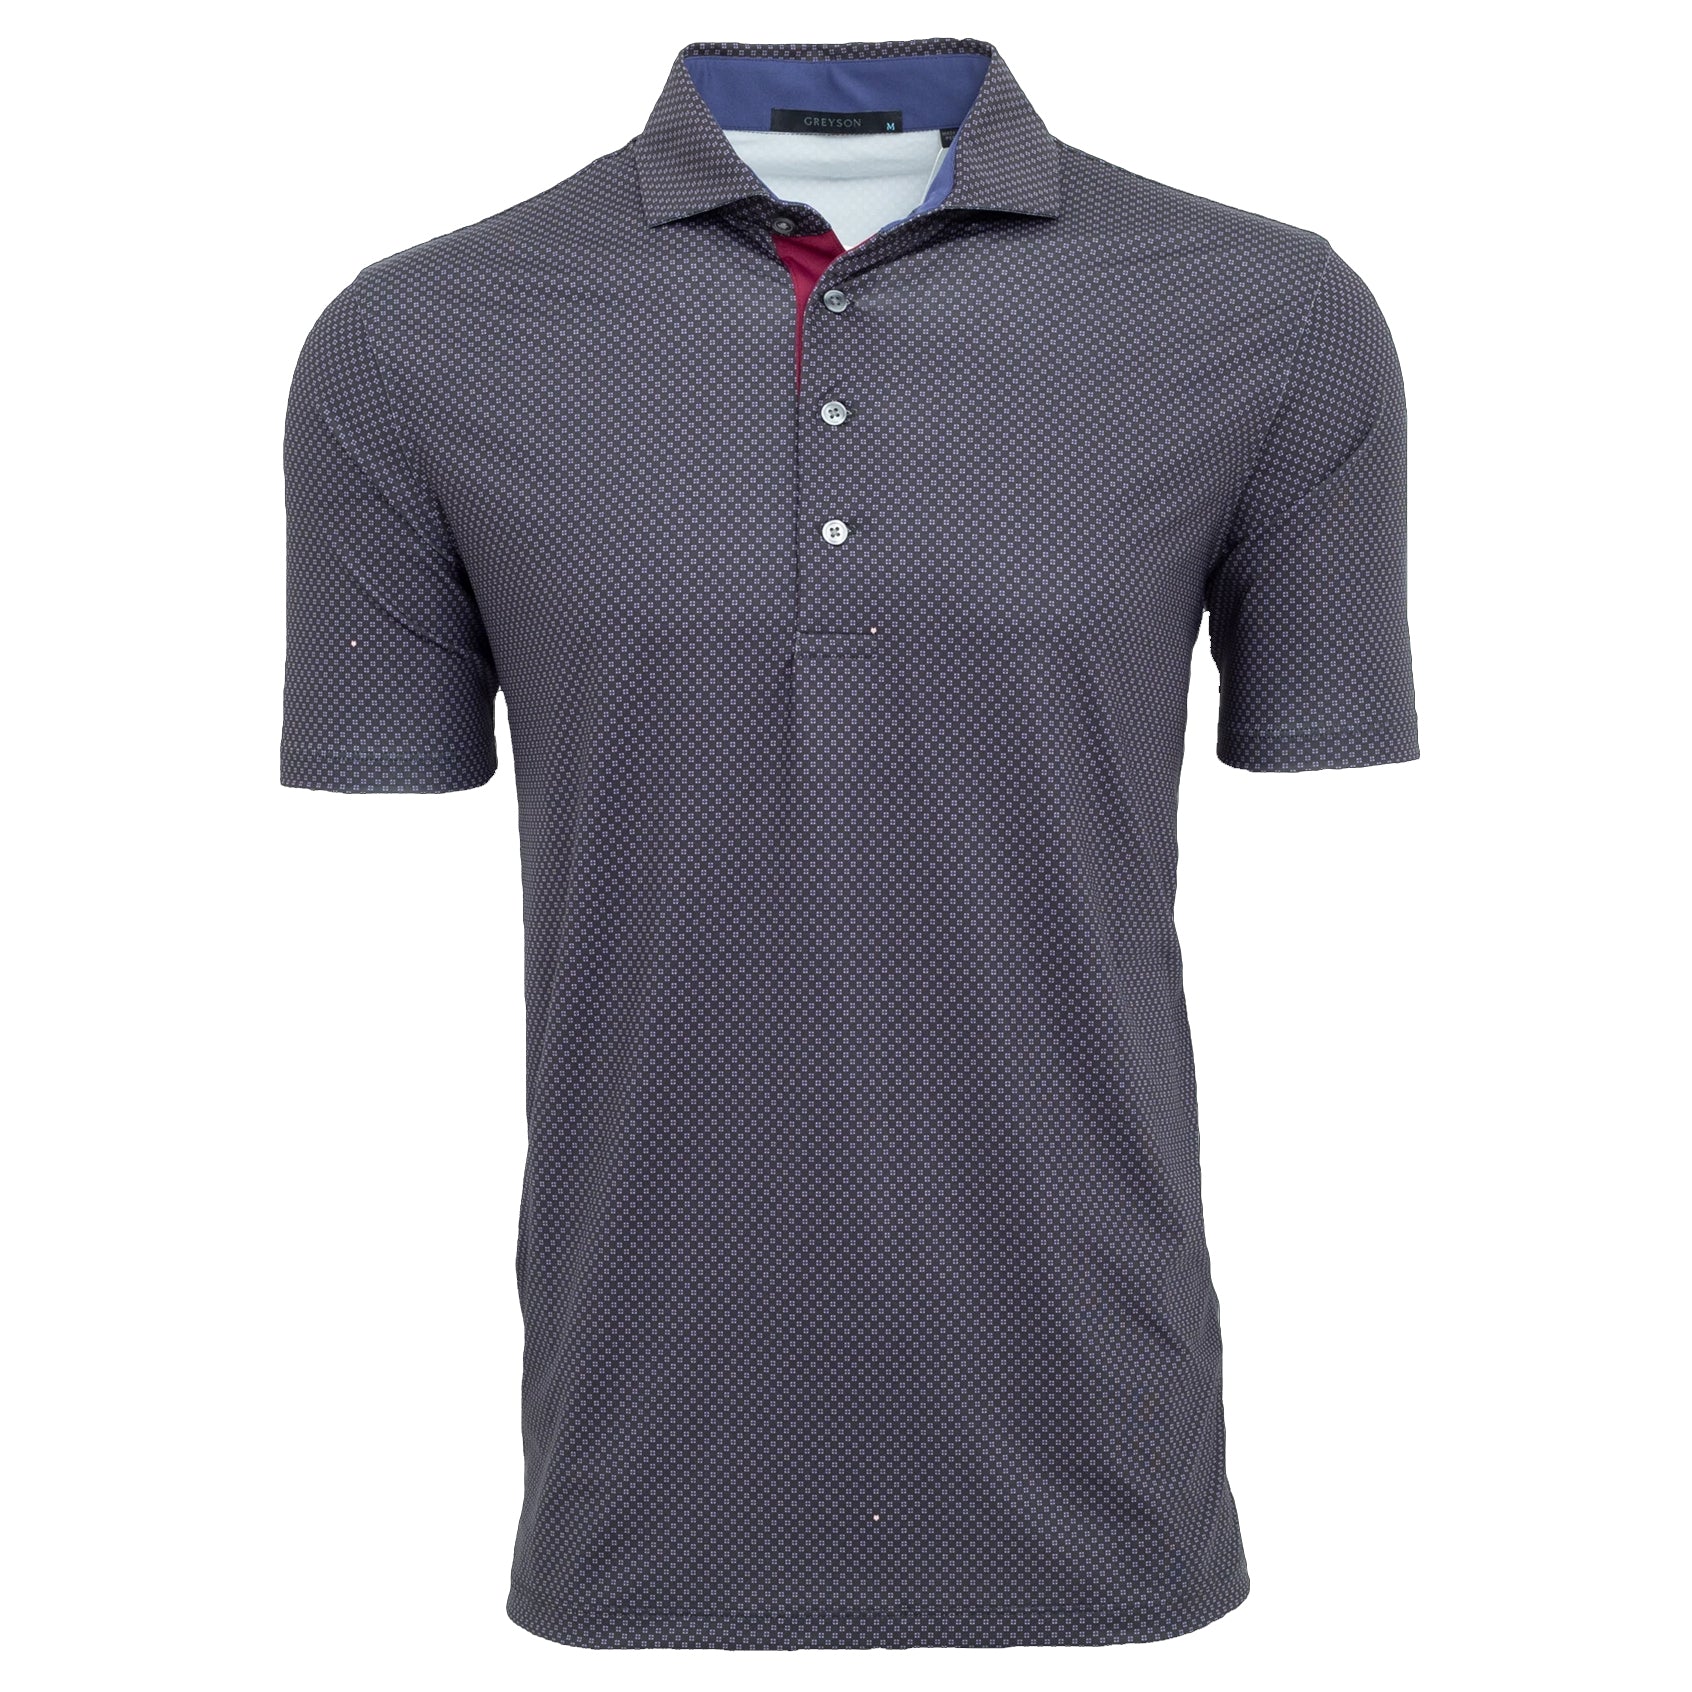 Greyson Golf Shirts | Golf-Clubs.com